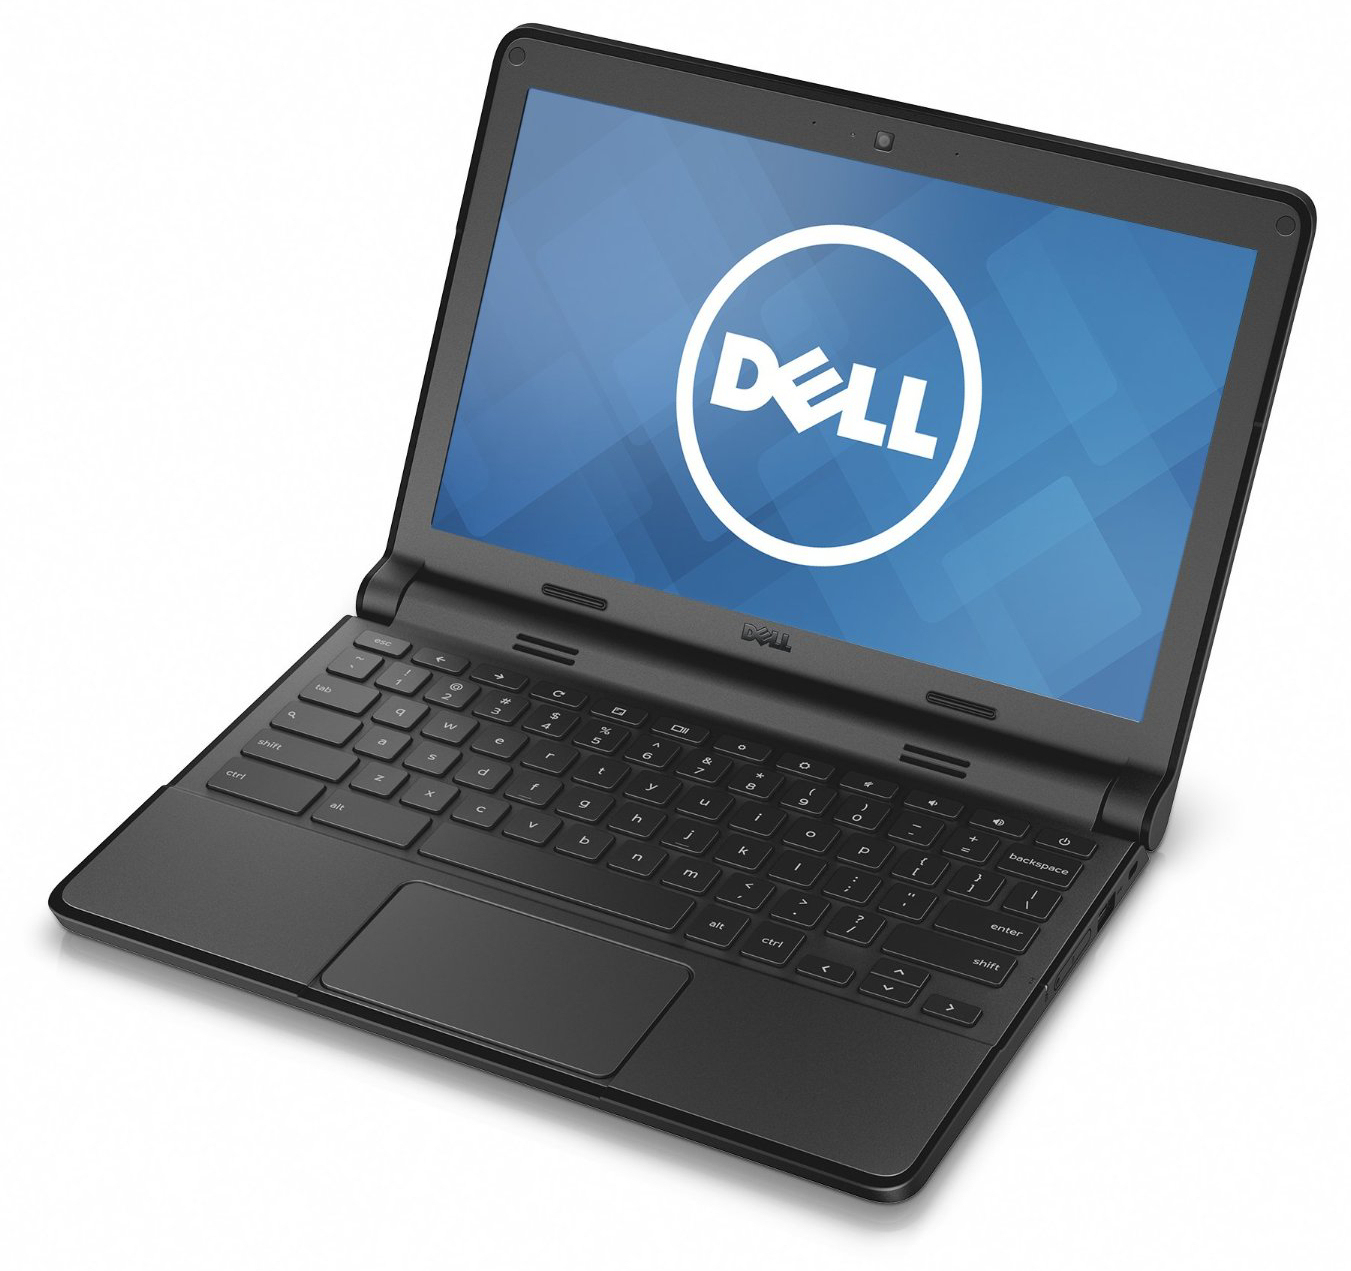 Dell Chromebook 3120 Intel Celeron N2840 2.16GHz 2GB RAM 16GB eMMC Chrome OS - B Grade Full Size Image